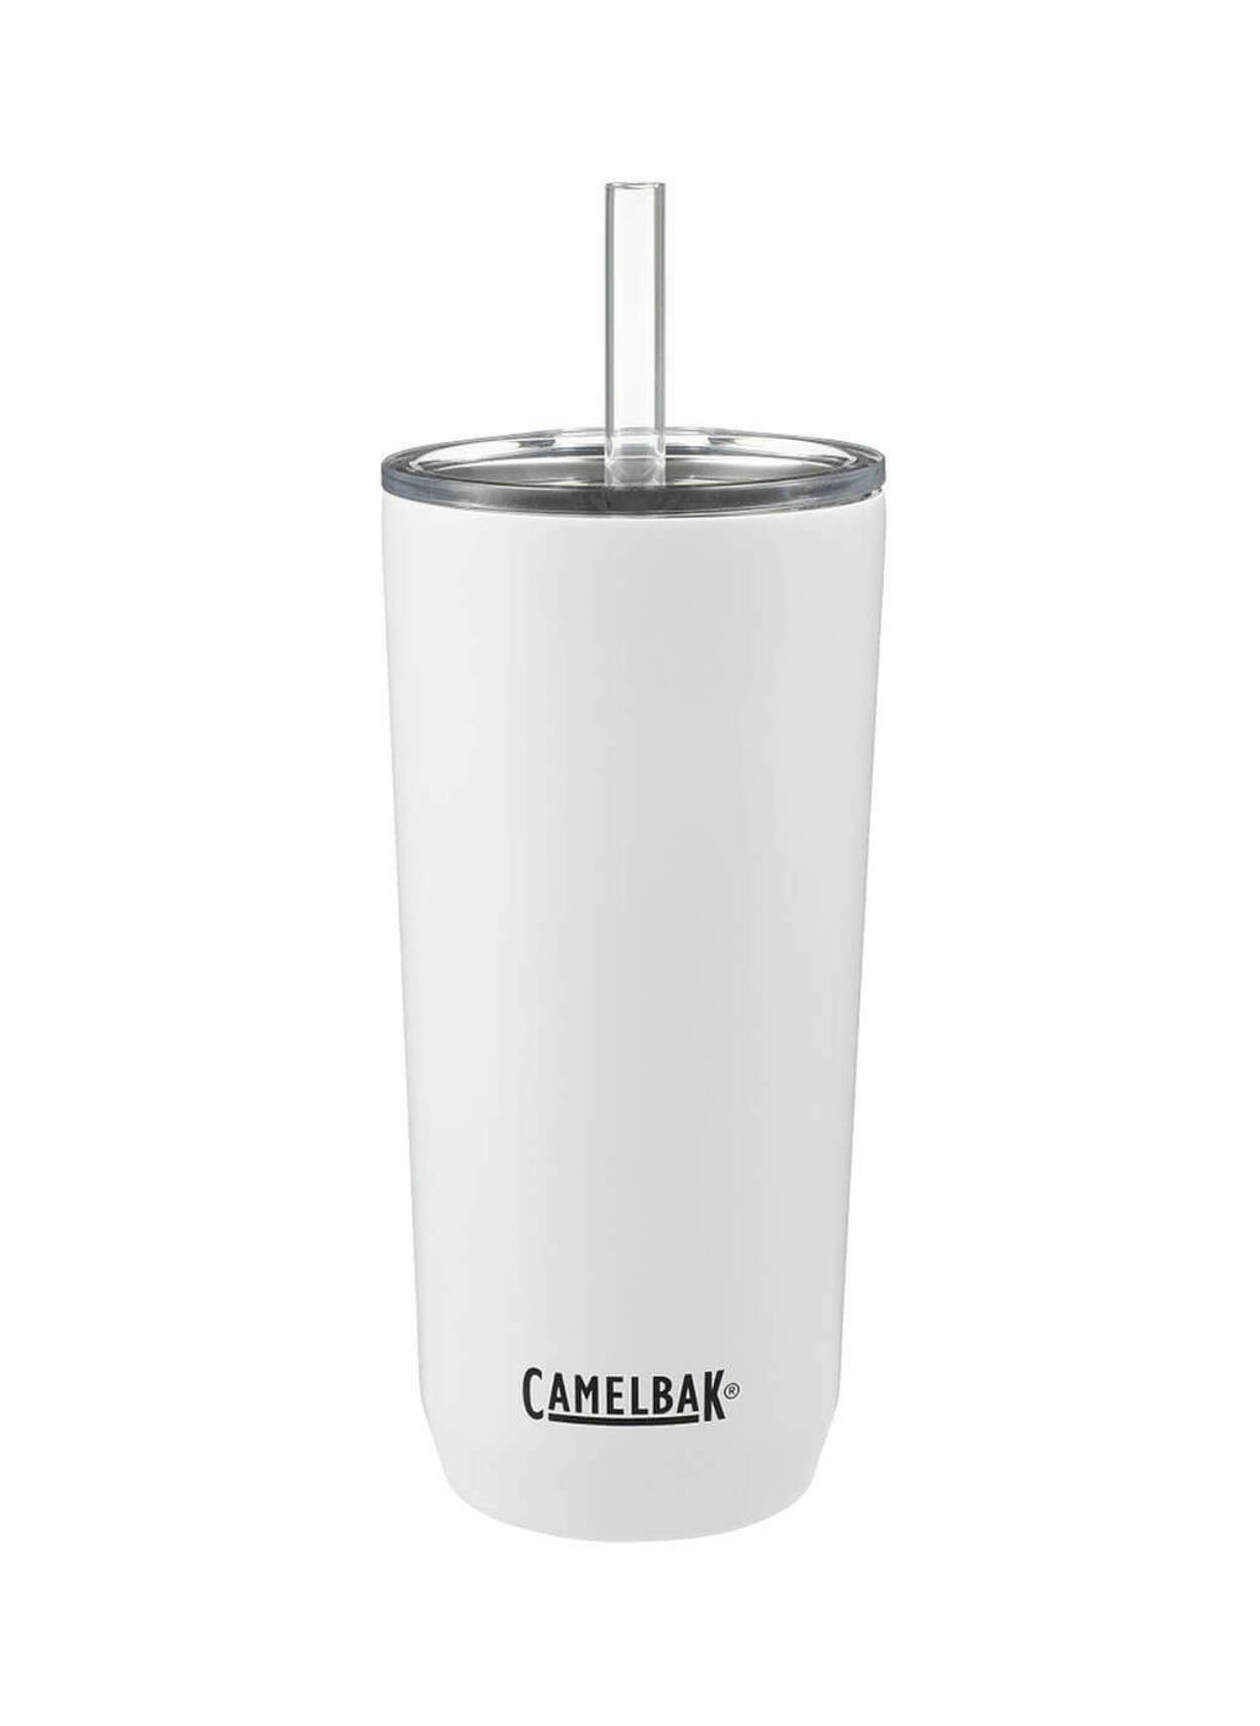 CamelBak 30oz Vacuum Insulated Stainless Steel Straw Tumbler - White